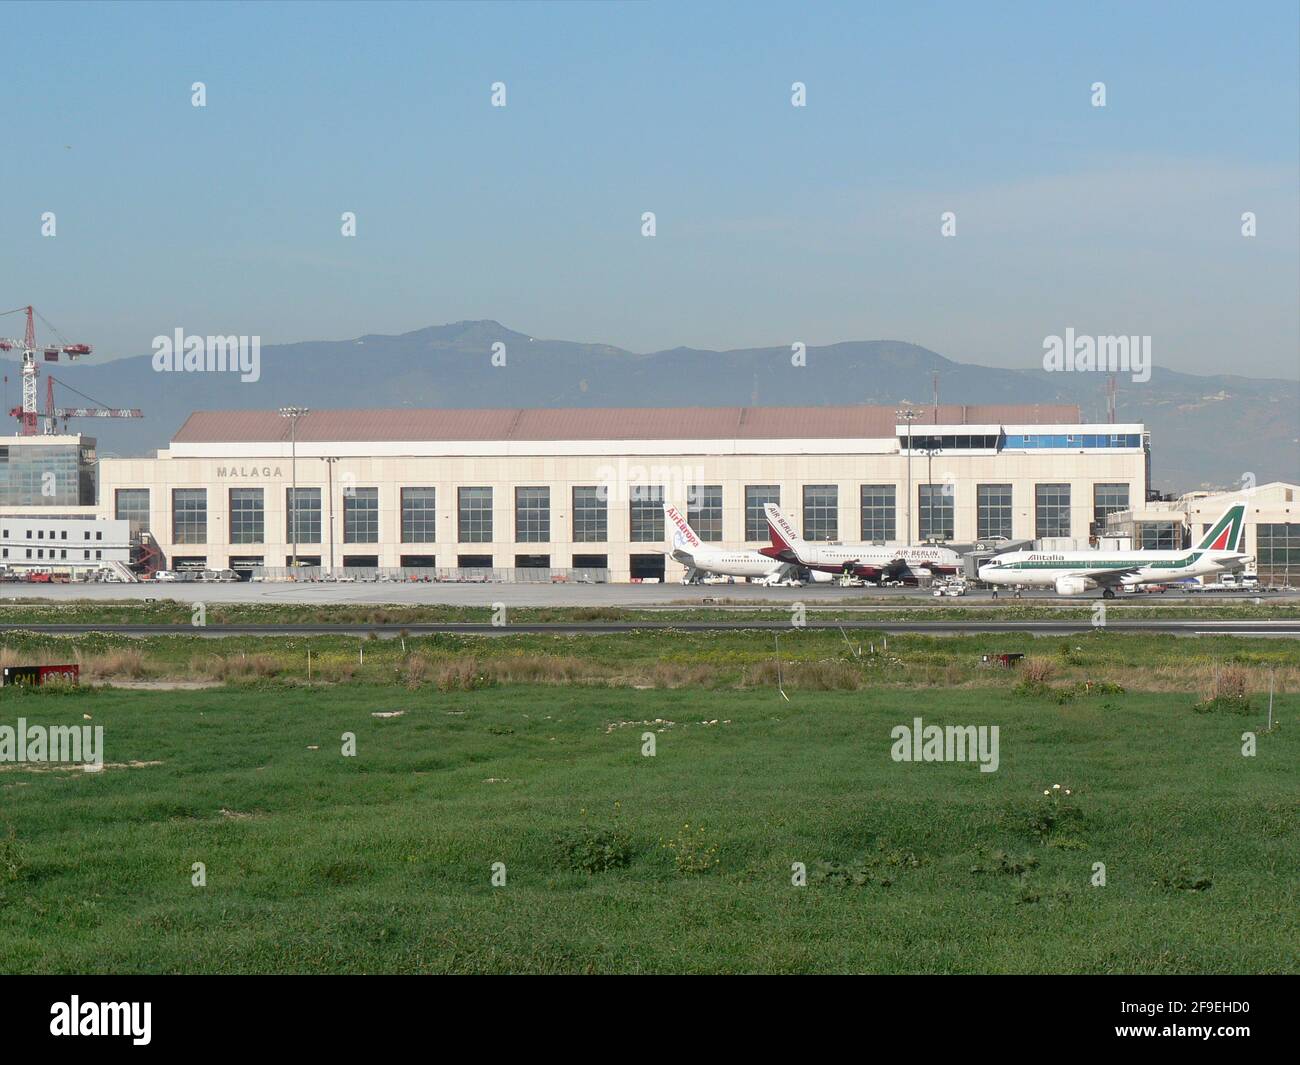 Terminal 2 (Pablo Ruiz Picasso) of Malaga airport (AGP), Spain. Stock Photo